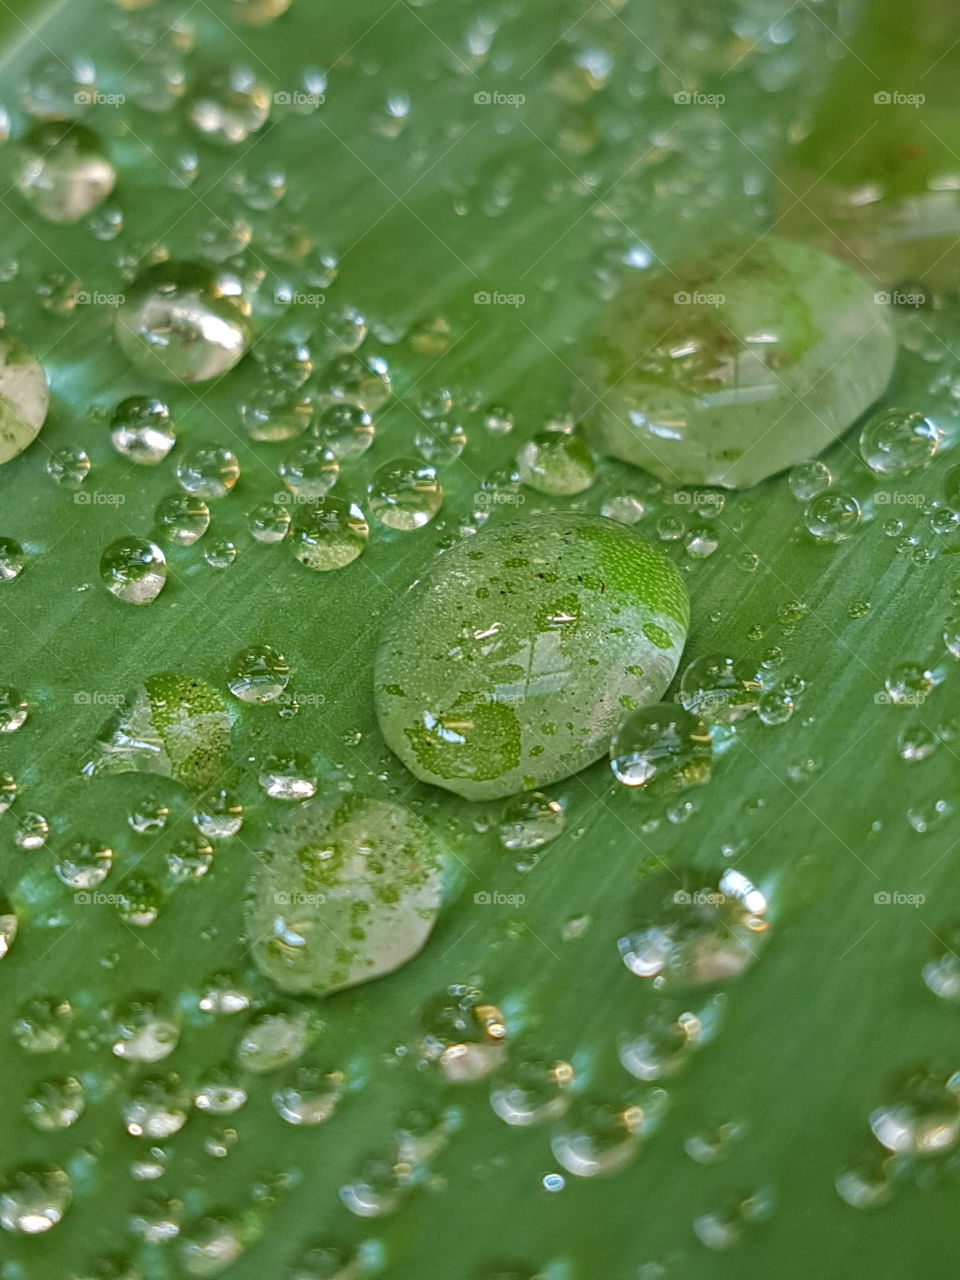 green leaf, water droplets